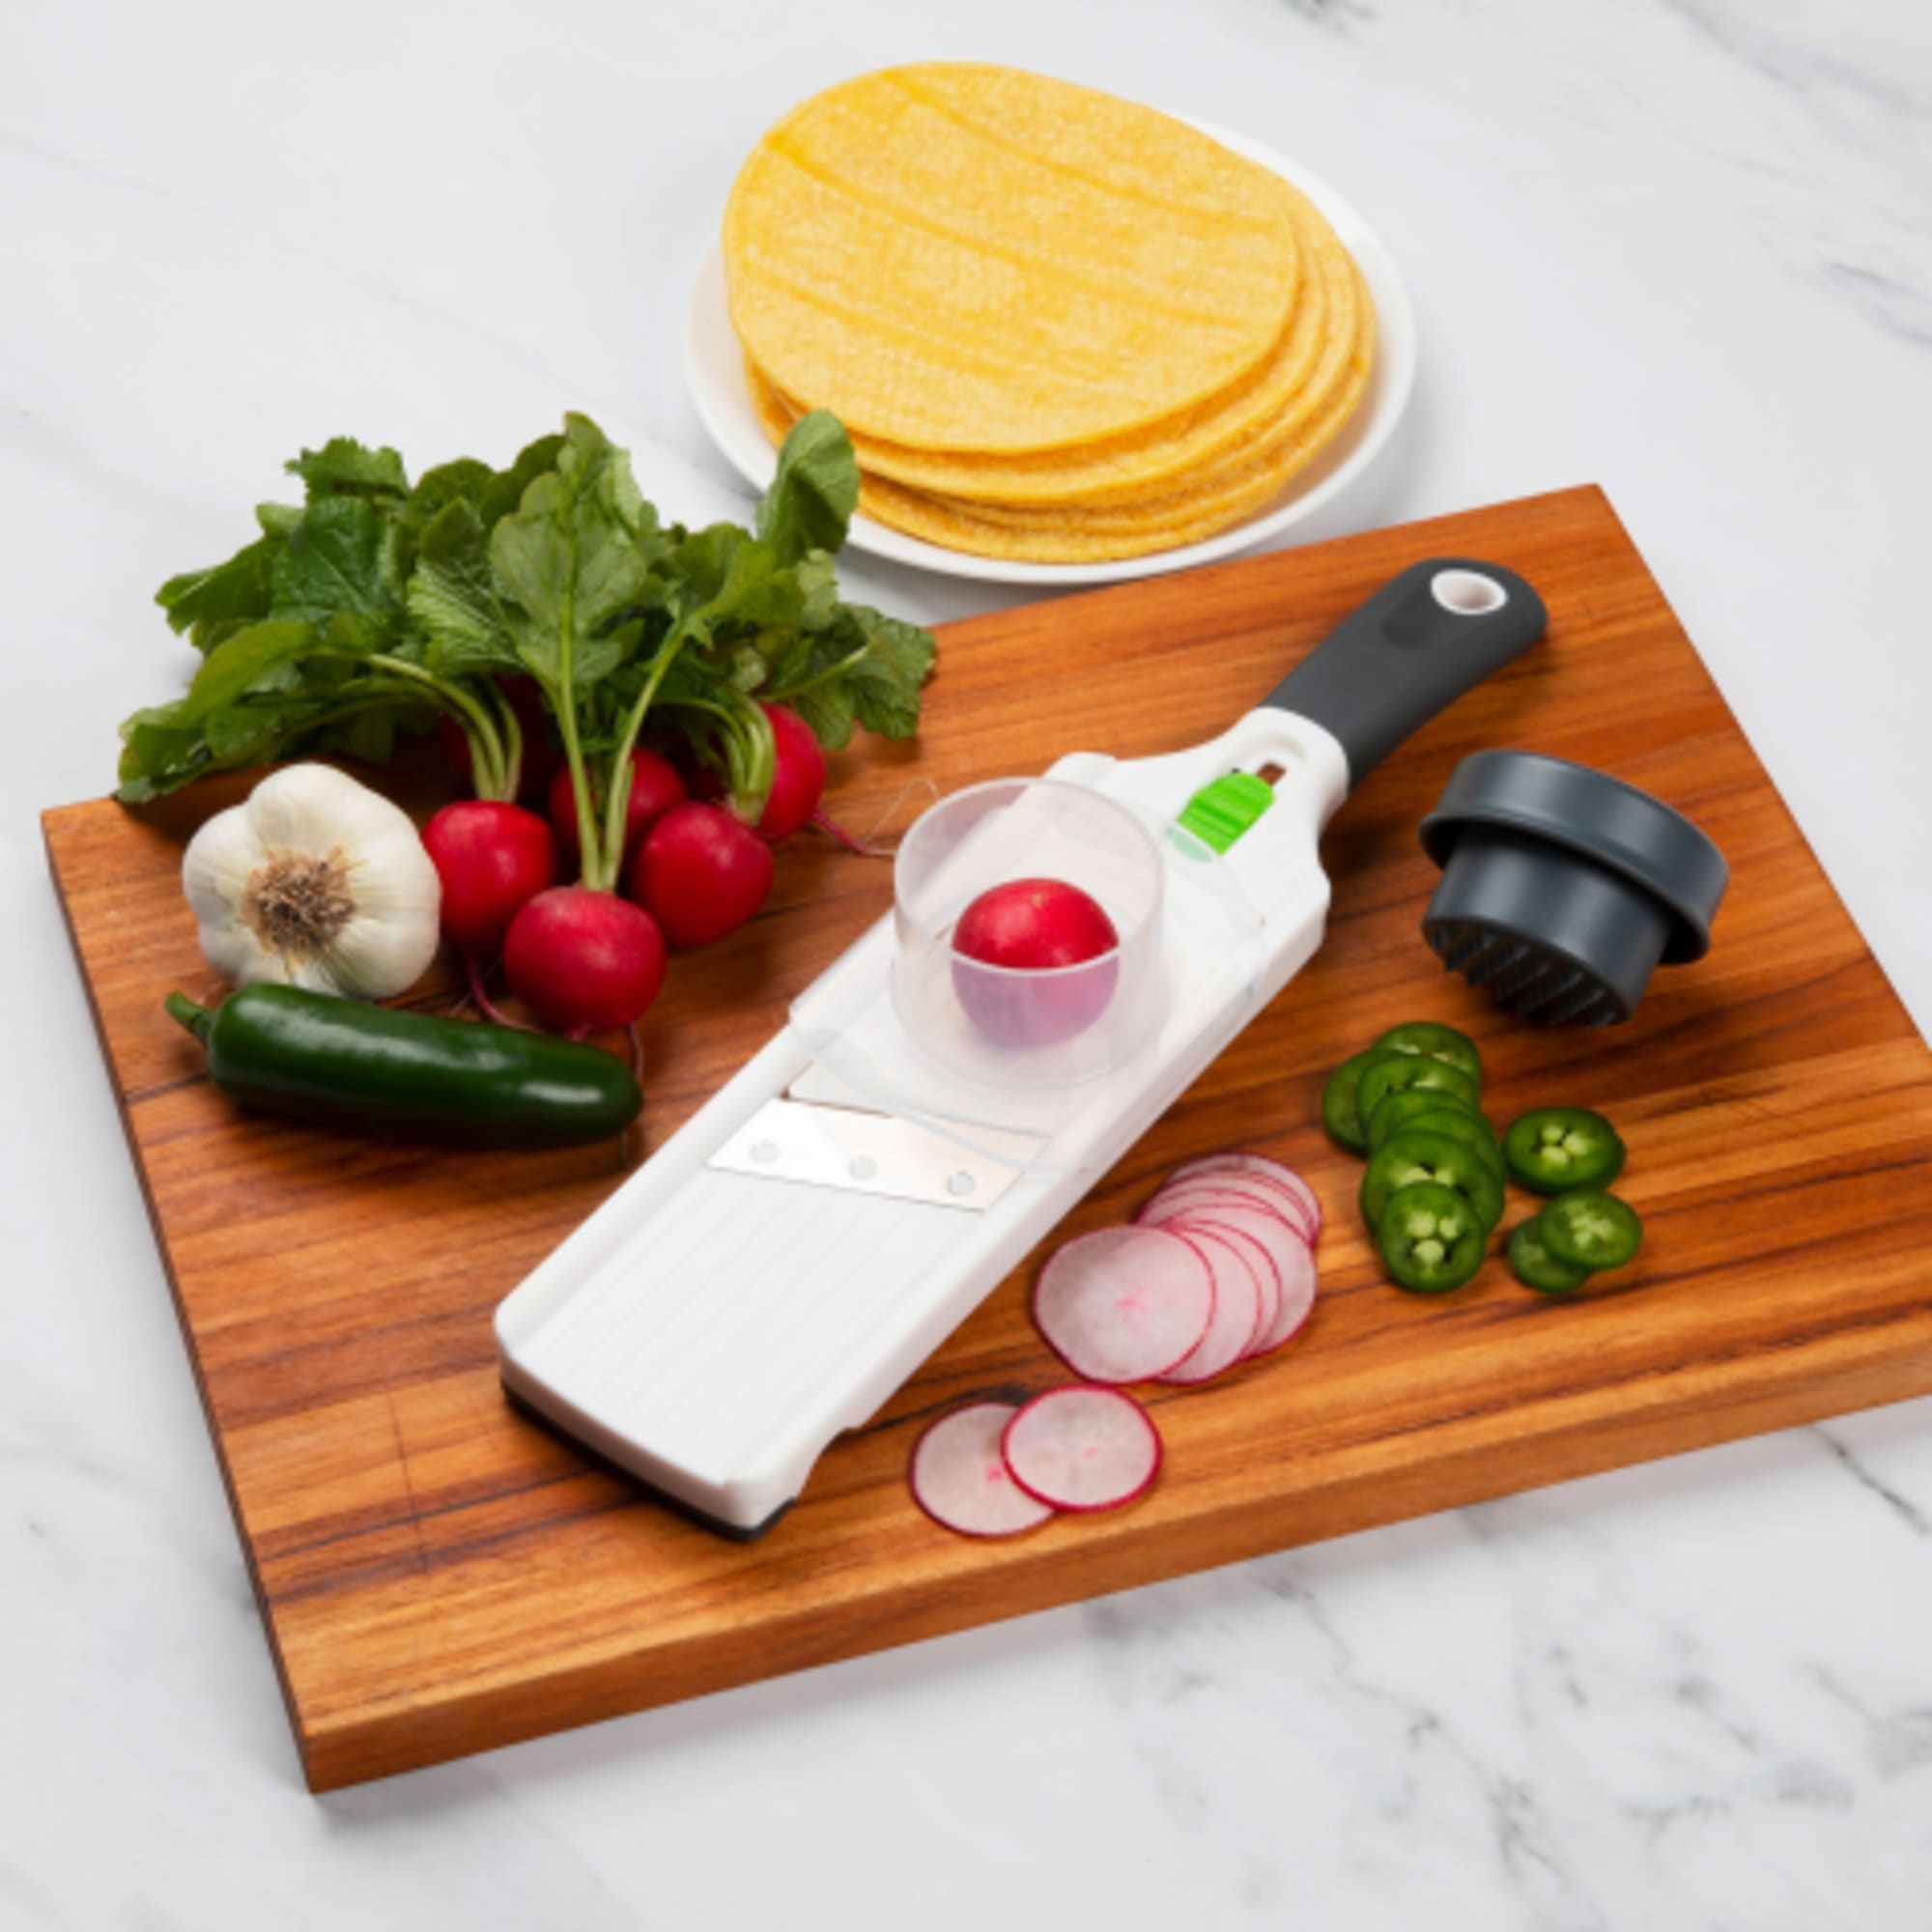 KYOCERA > Kitchen slicer set for shredding and slicing fruits, vegetables  and cheeses